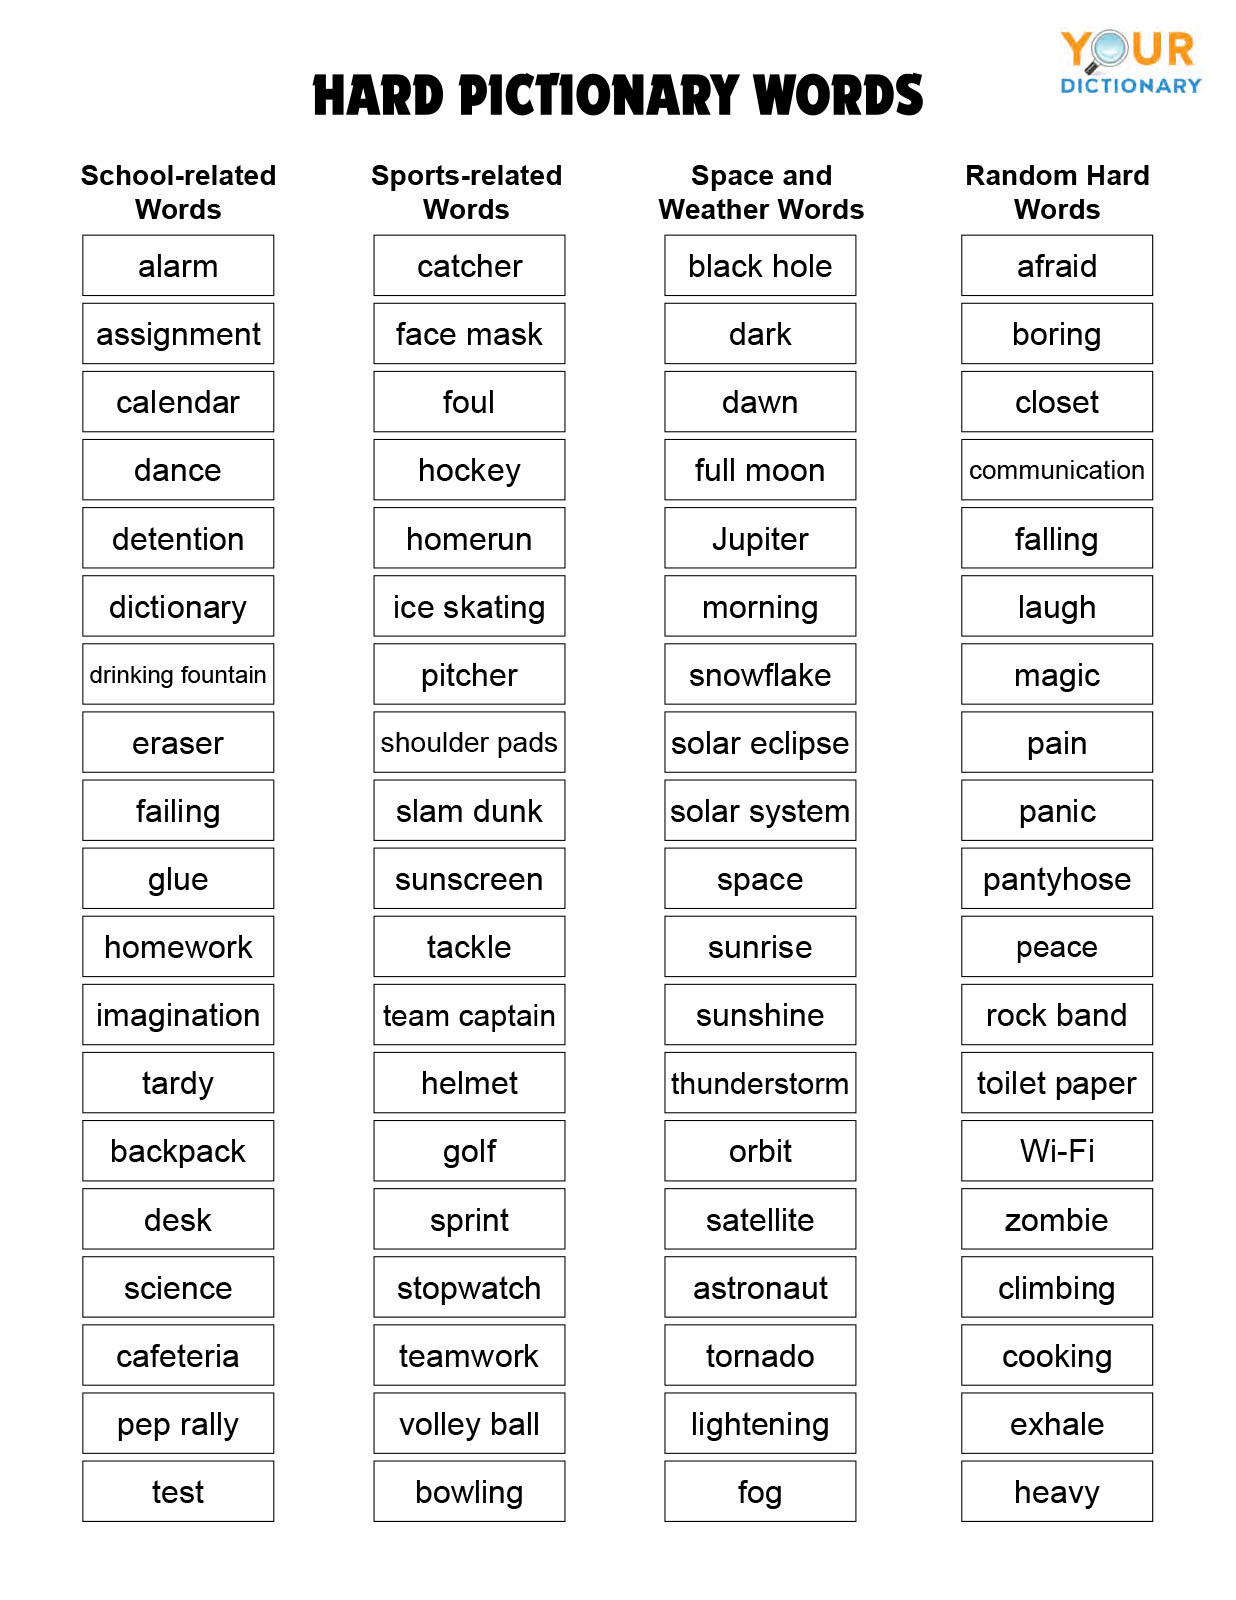 Hard Pictionary Words List